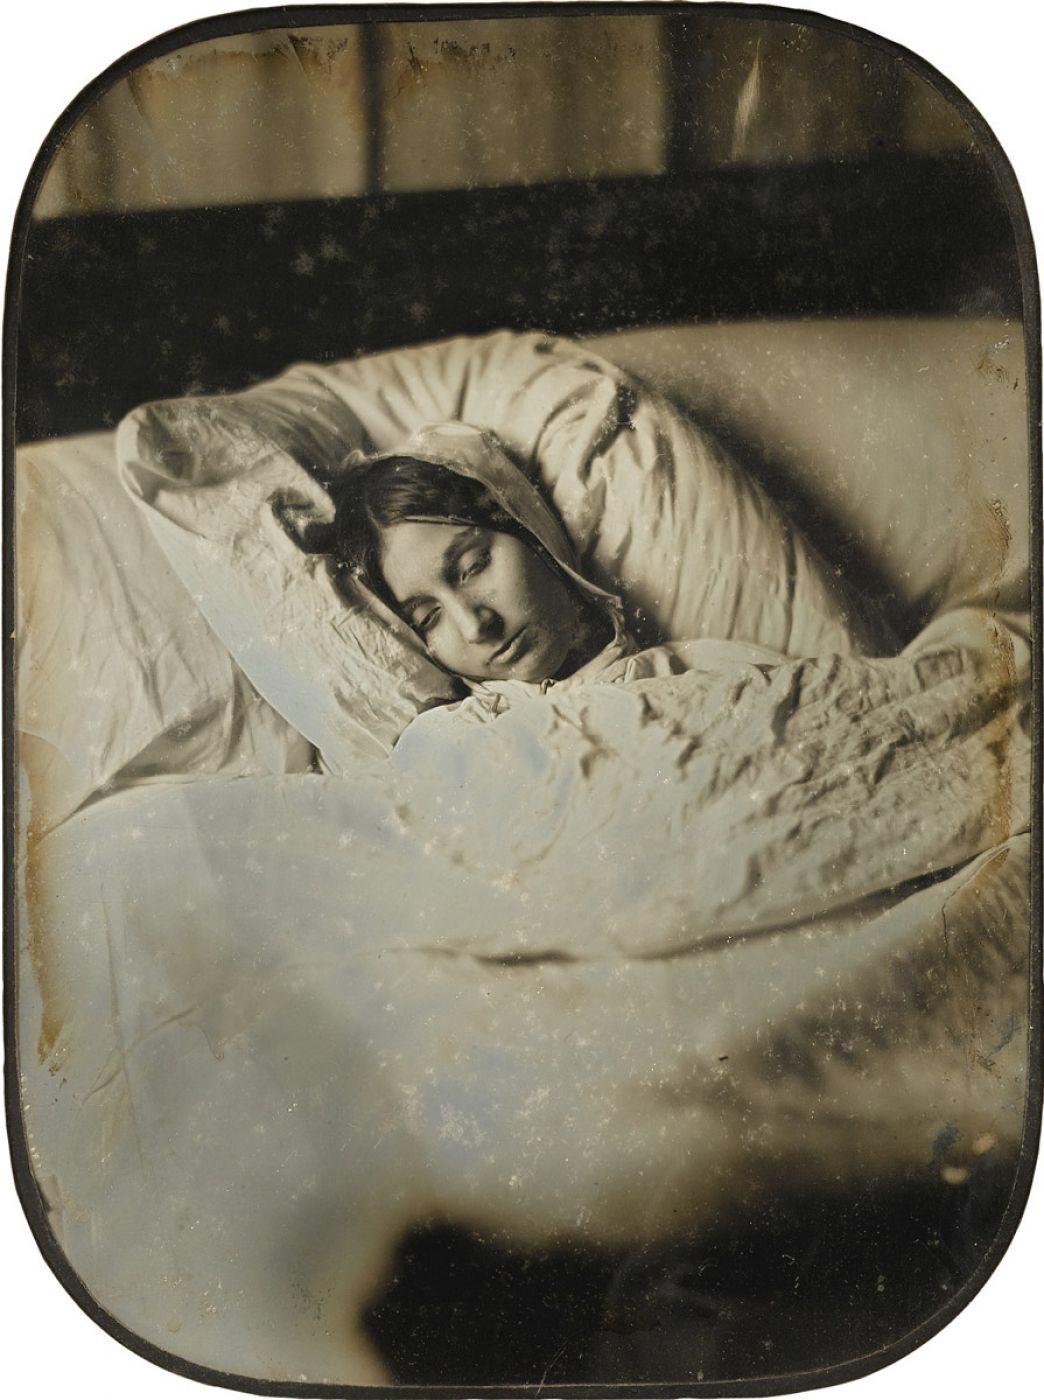 Jean-Baptiste Sabatier Blot, “Post Mortem Portrait”, 1850 ca.